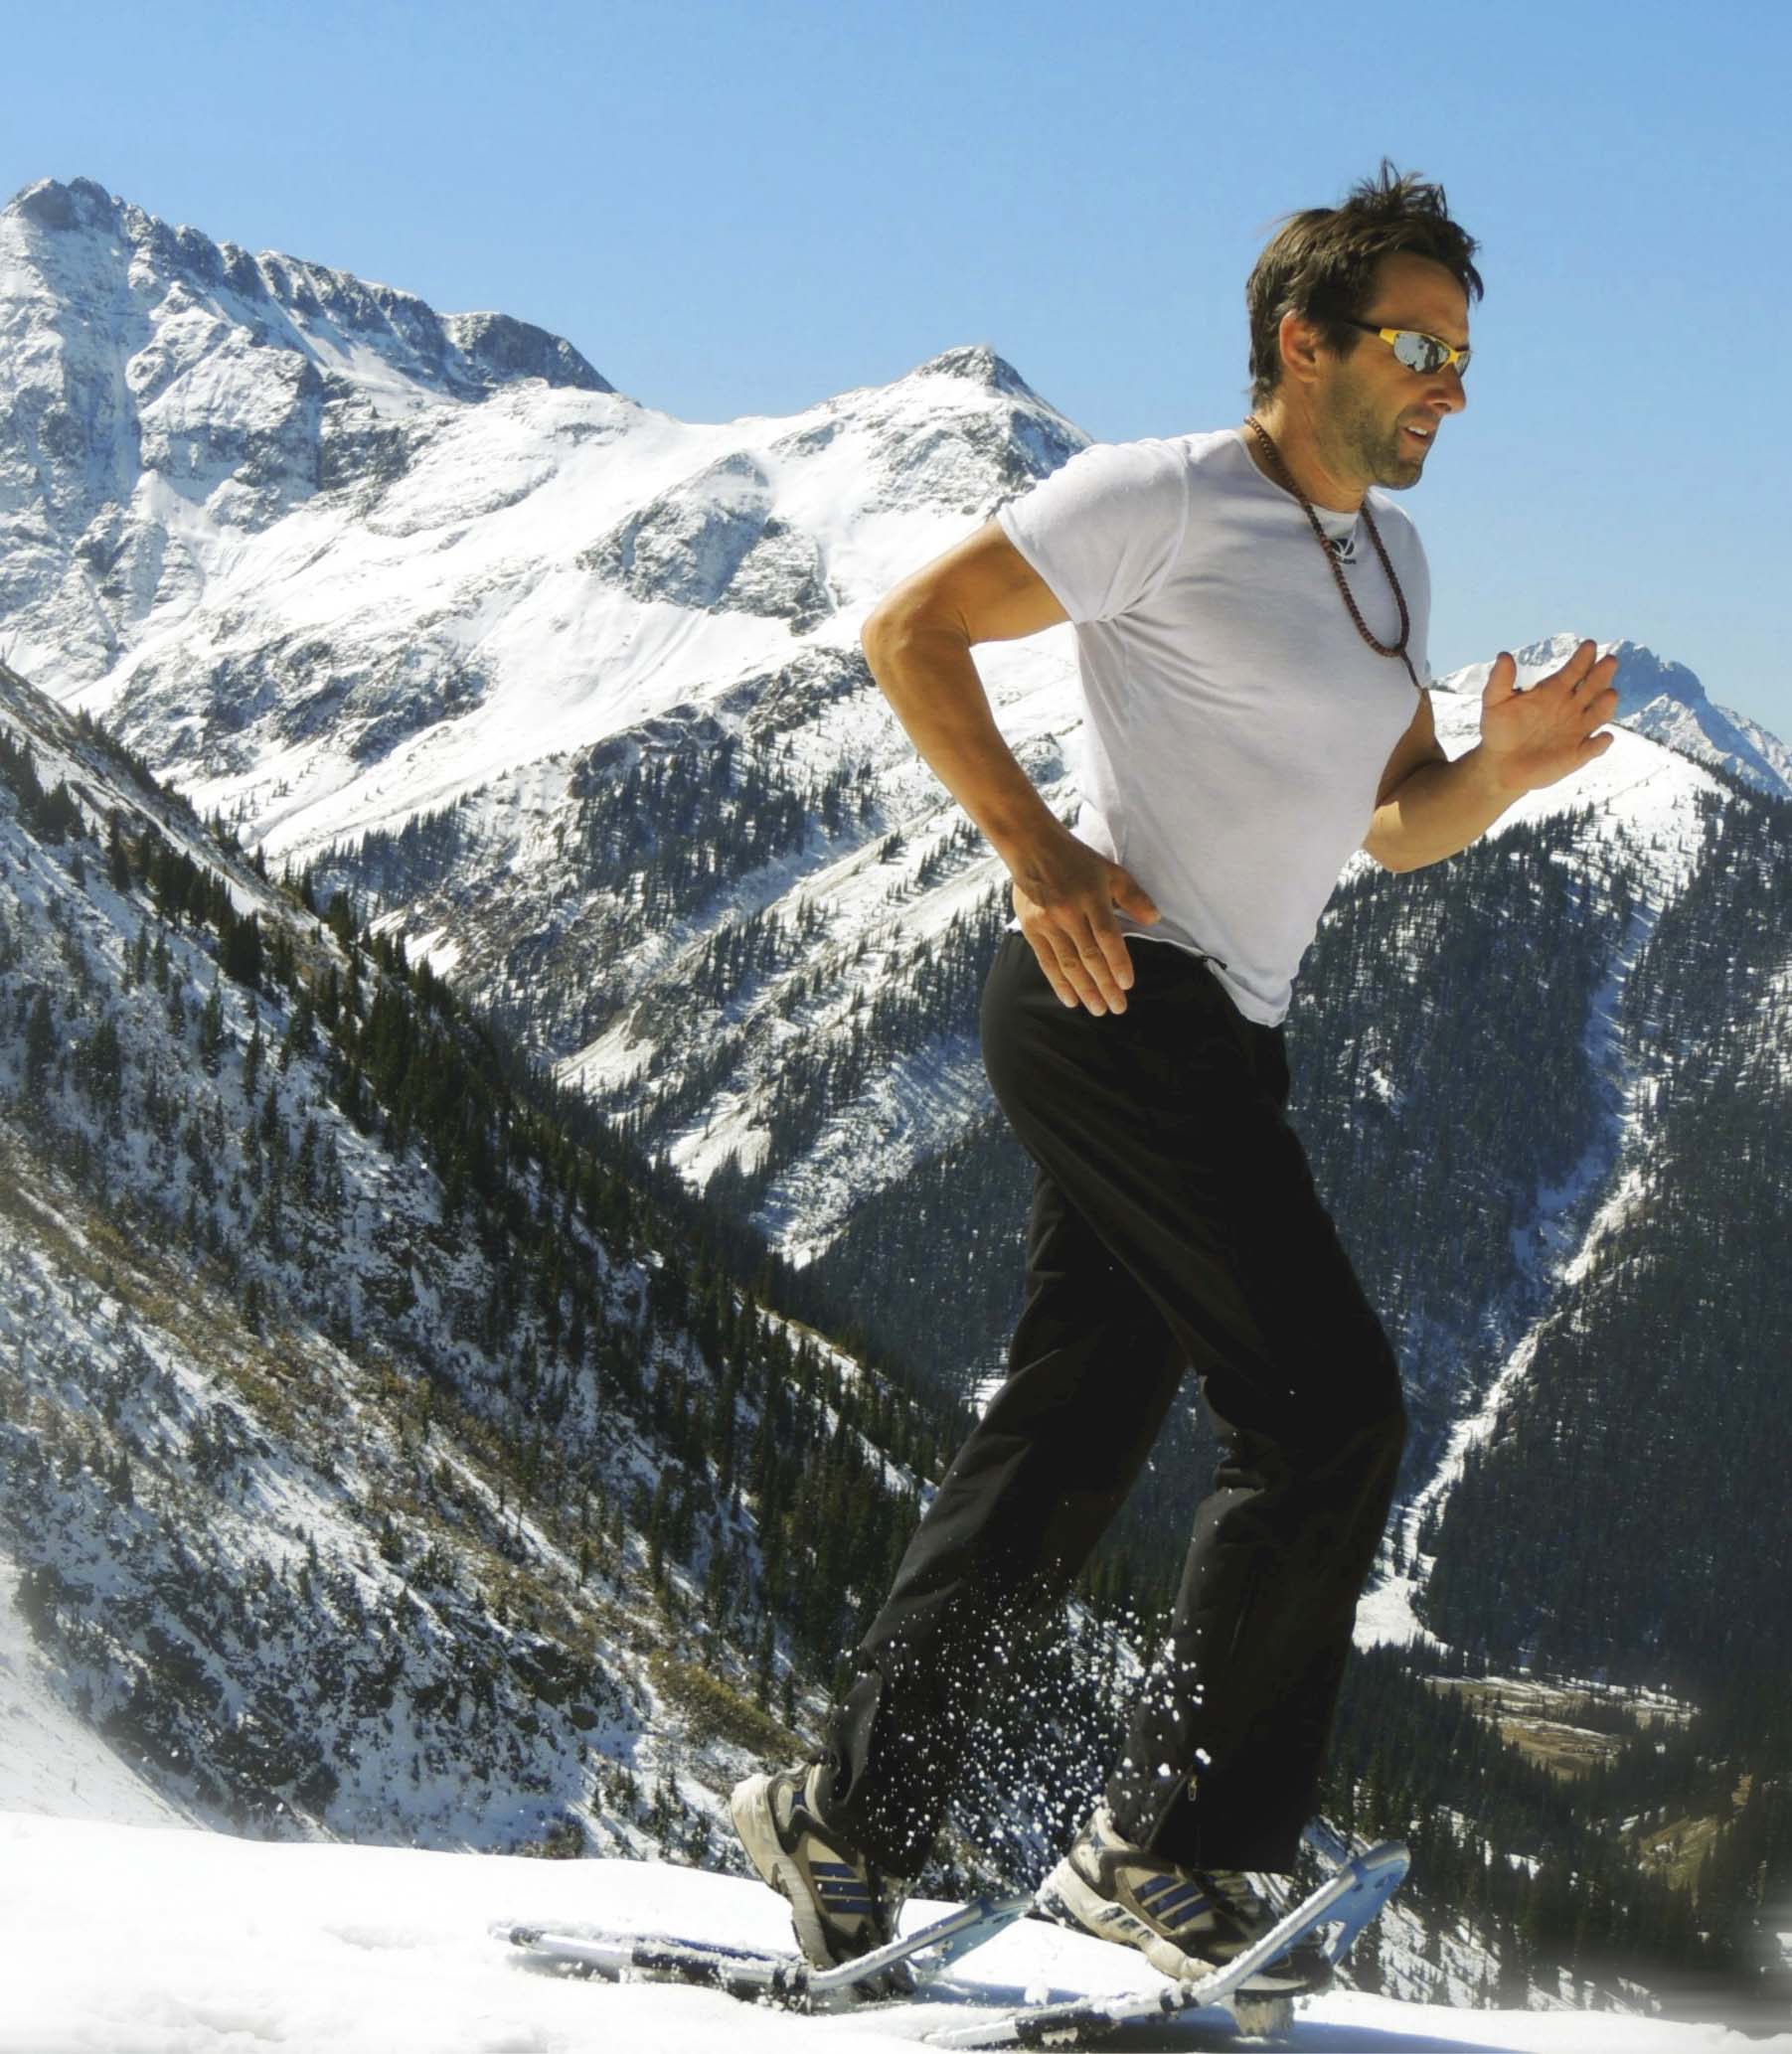 Steve Ilg snowshoe training at altitude